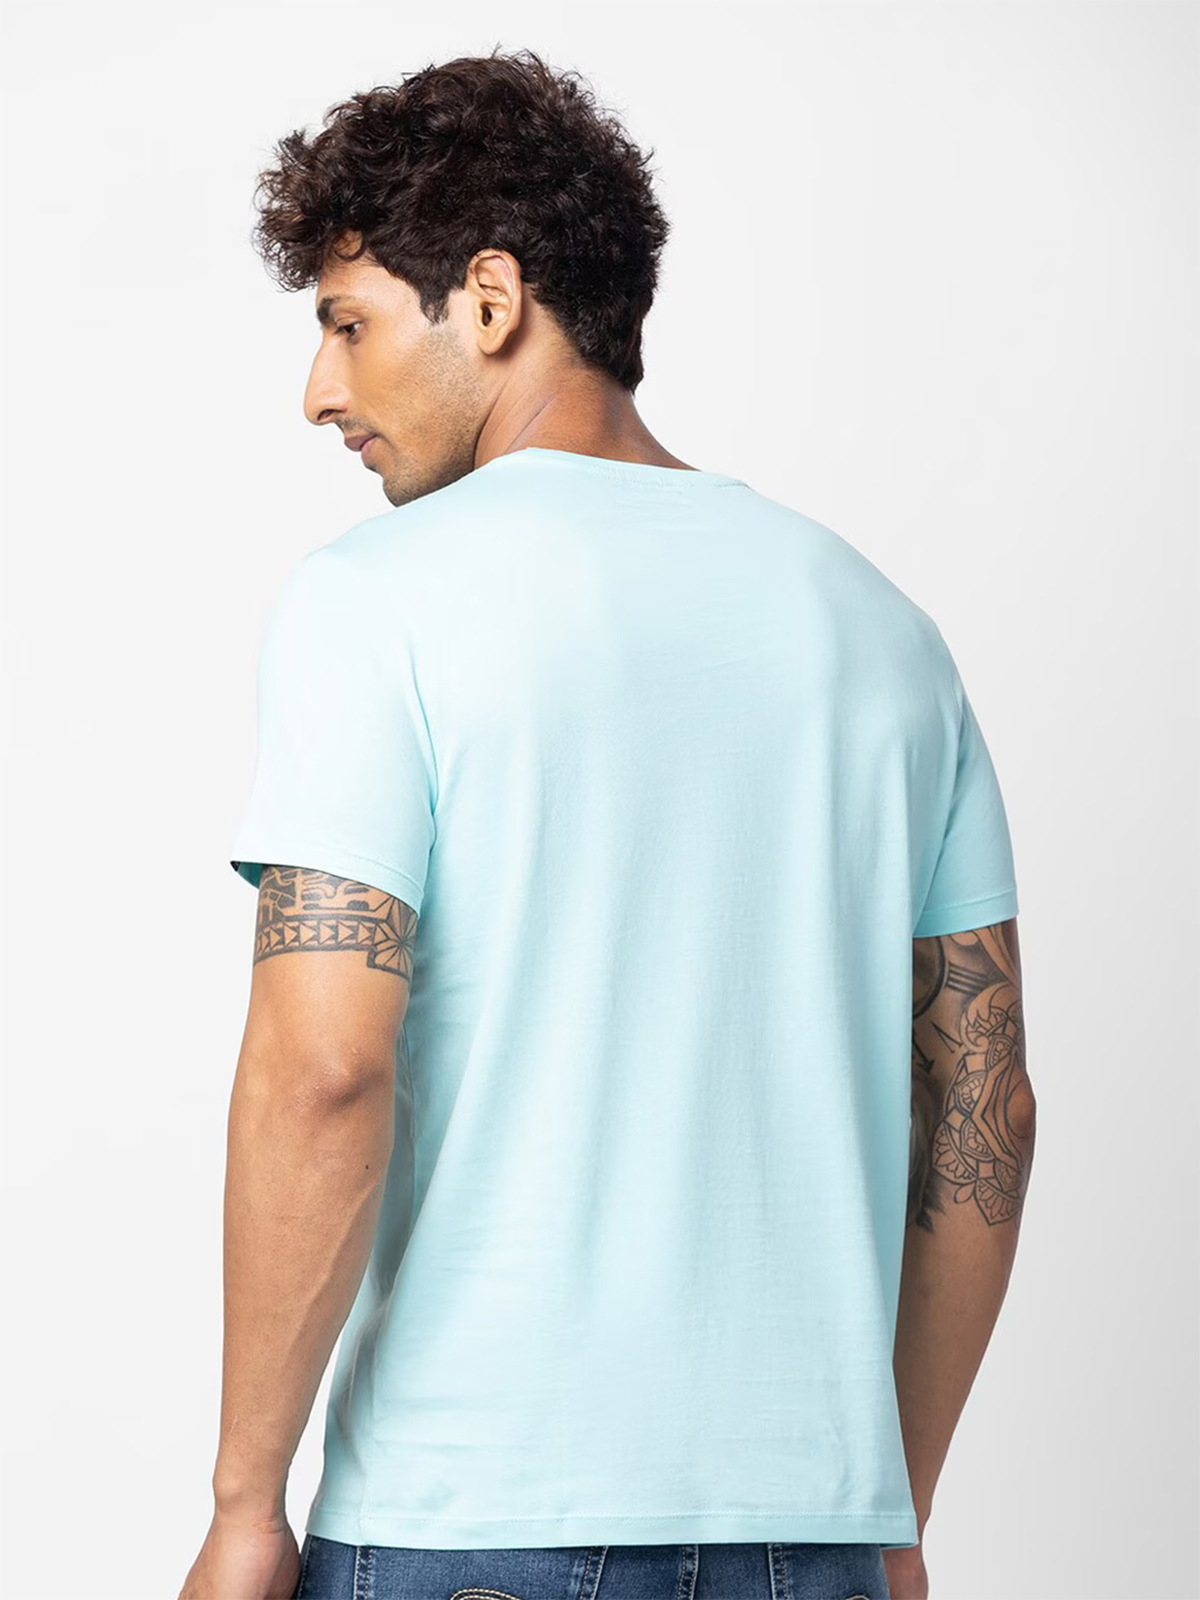 Spykar sky blue cotton half sleeves t shirt - G3-MCS15843 | G3nxt.com